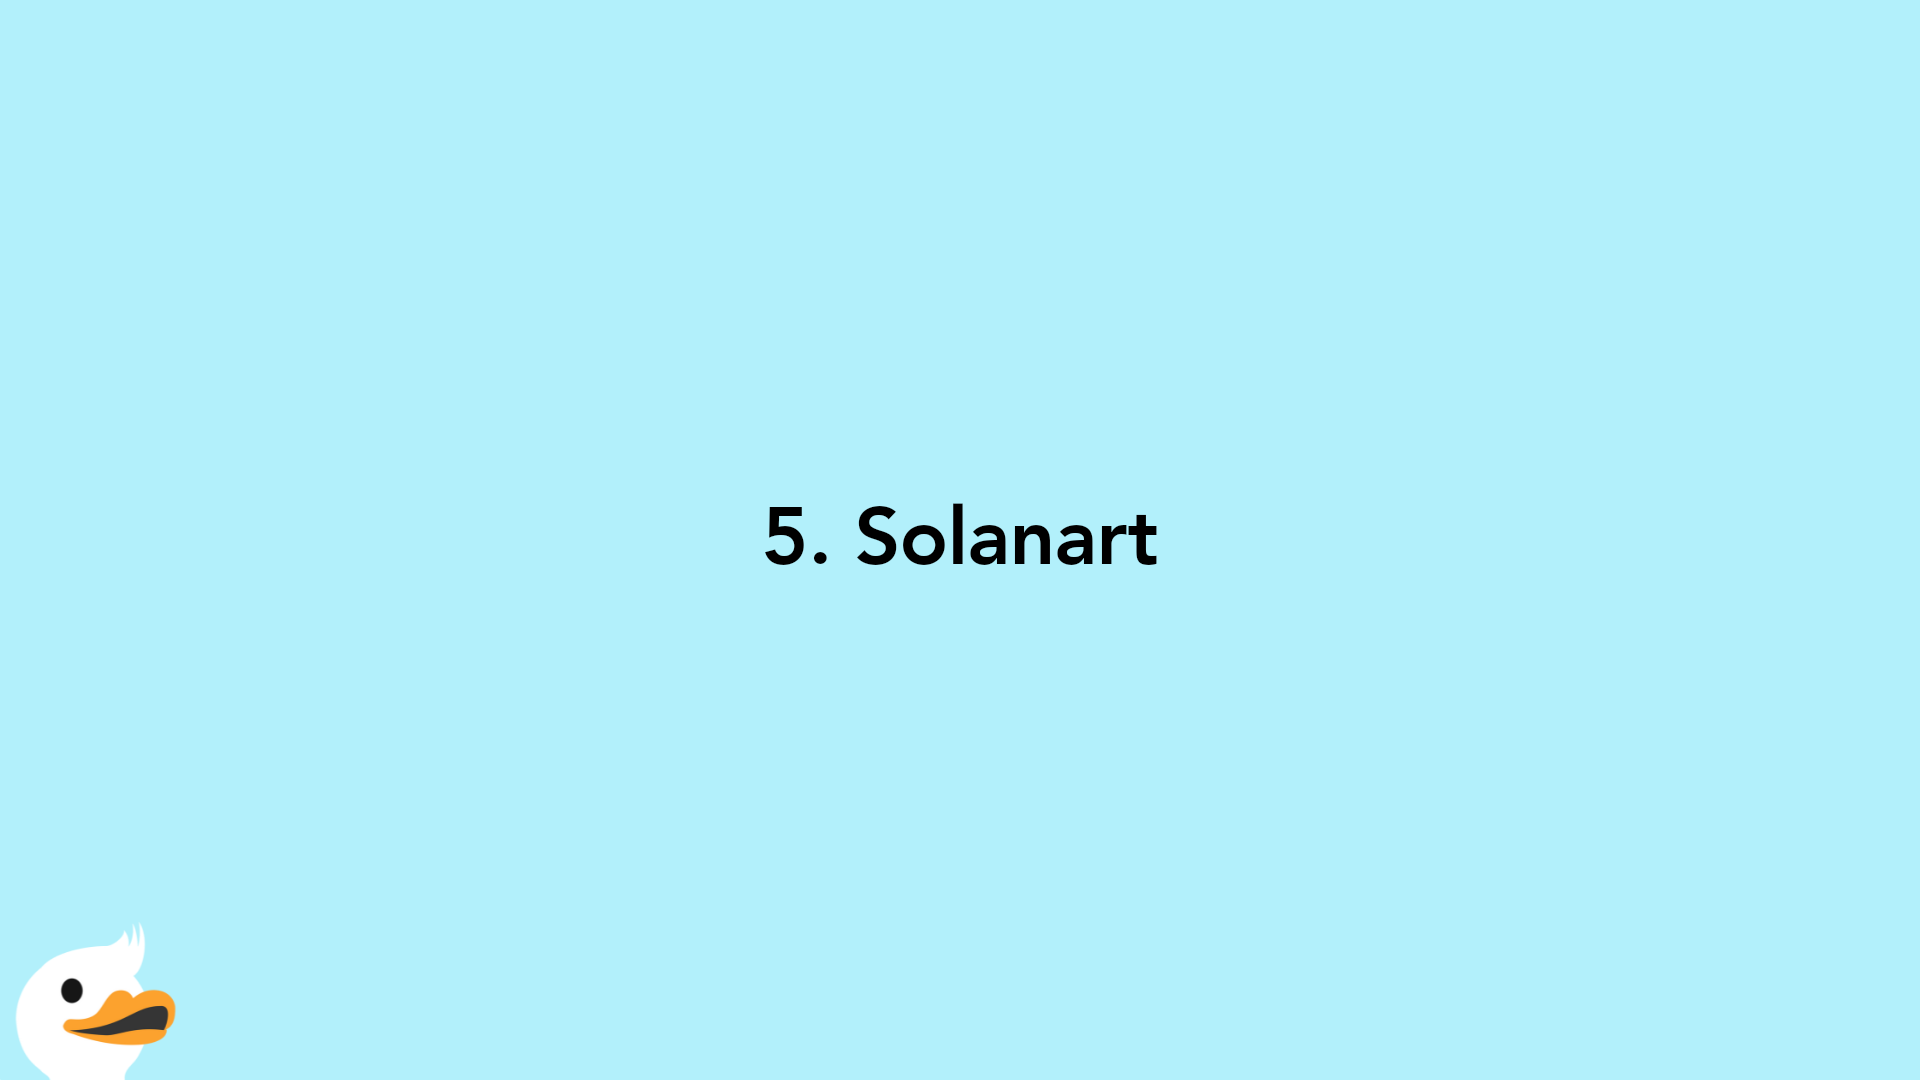 5. Solanart